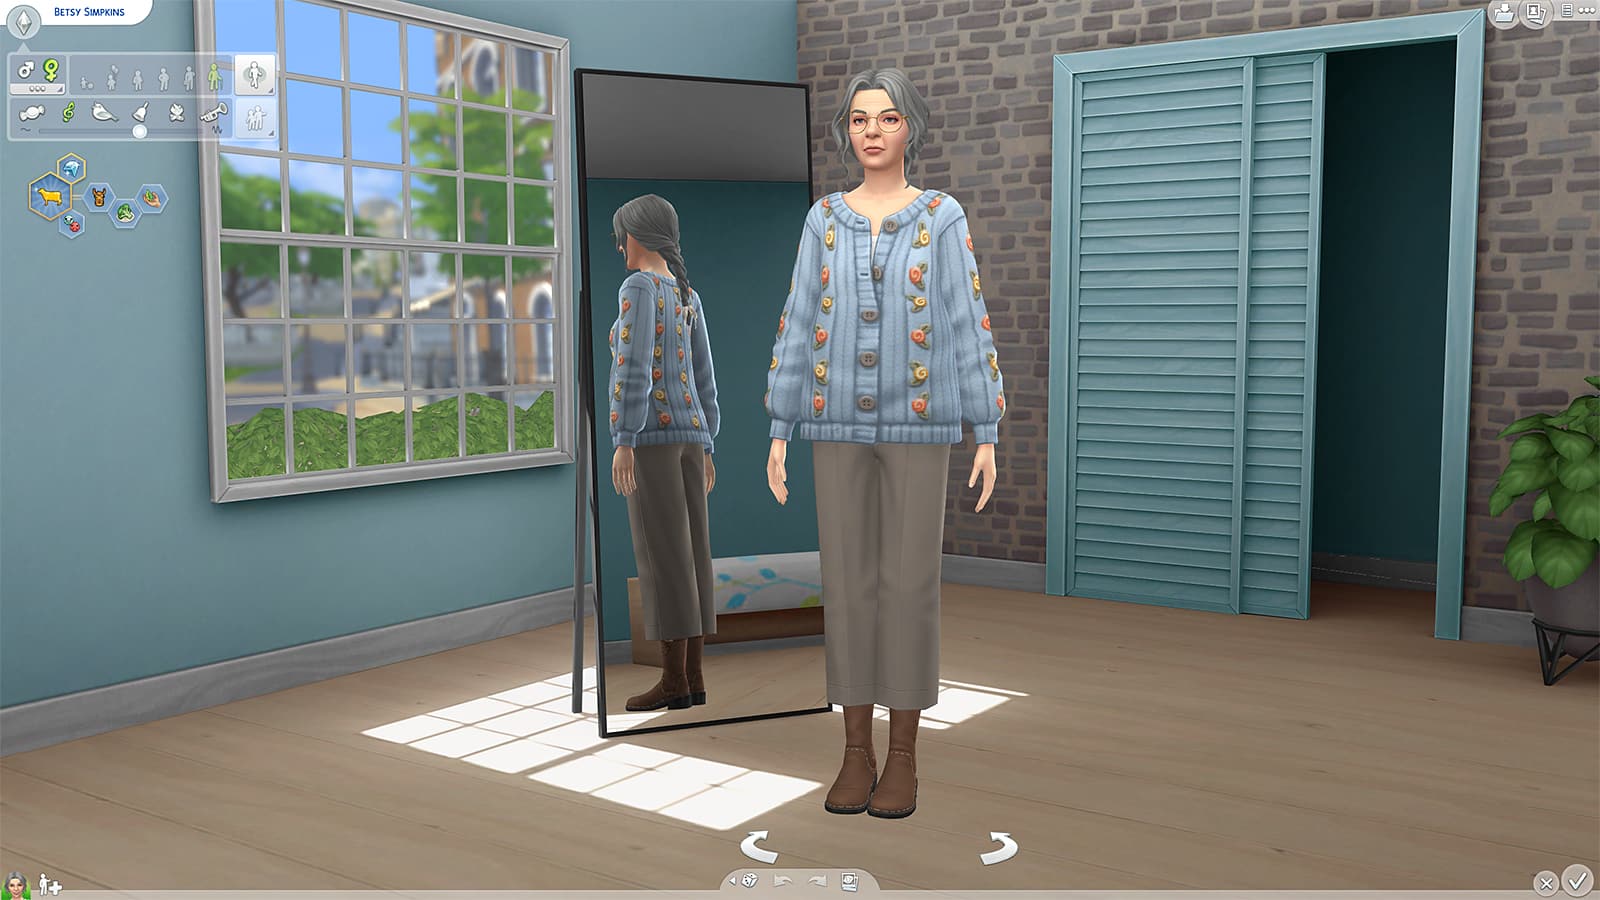 The Sims 4 CAS room mod